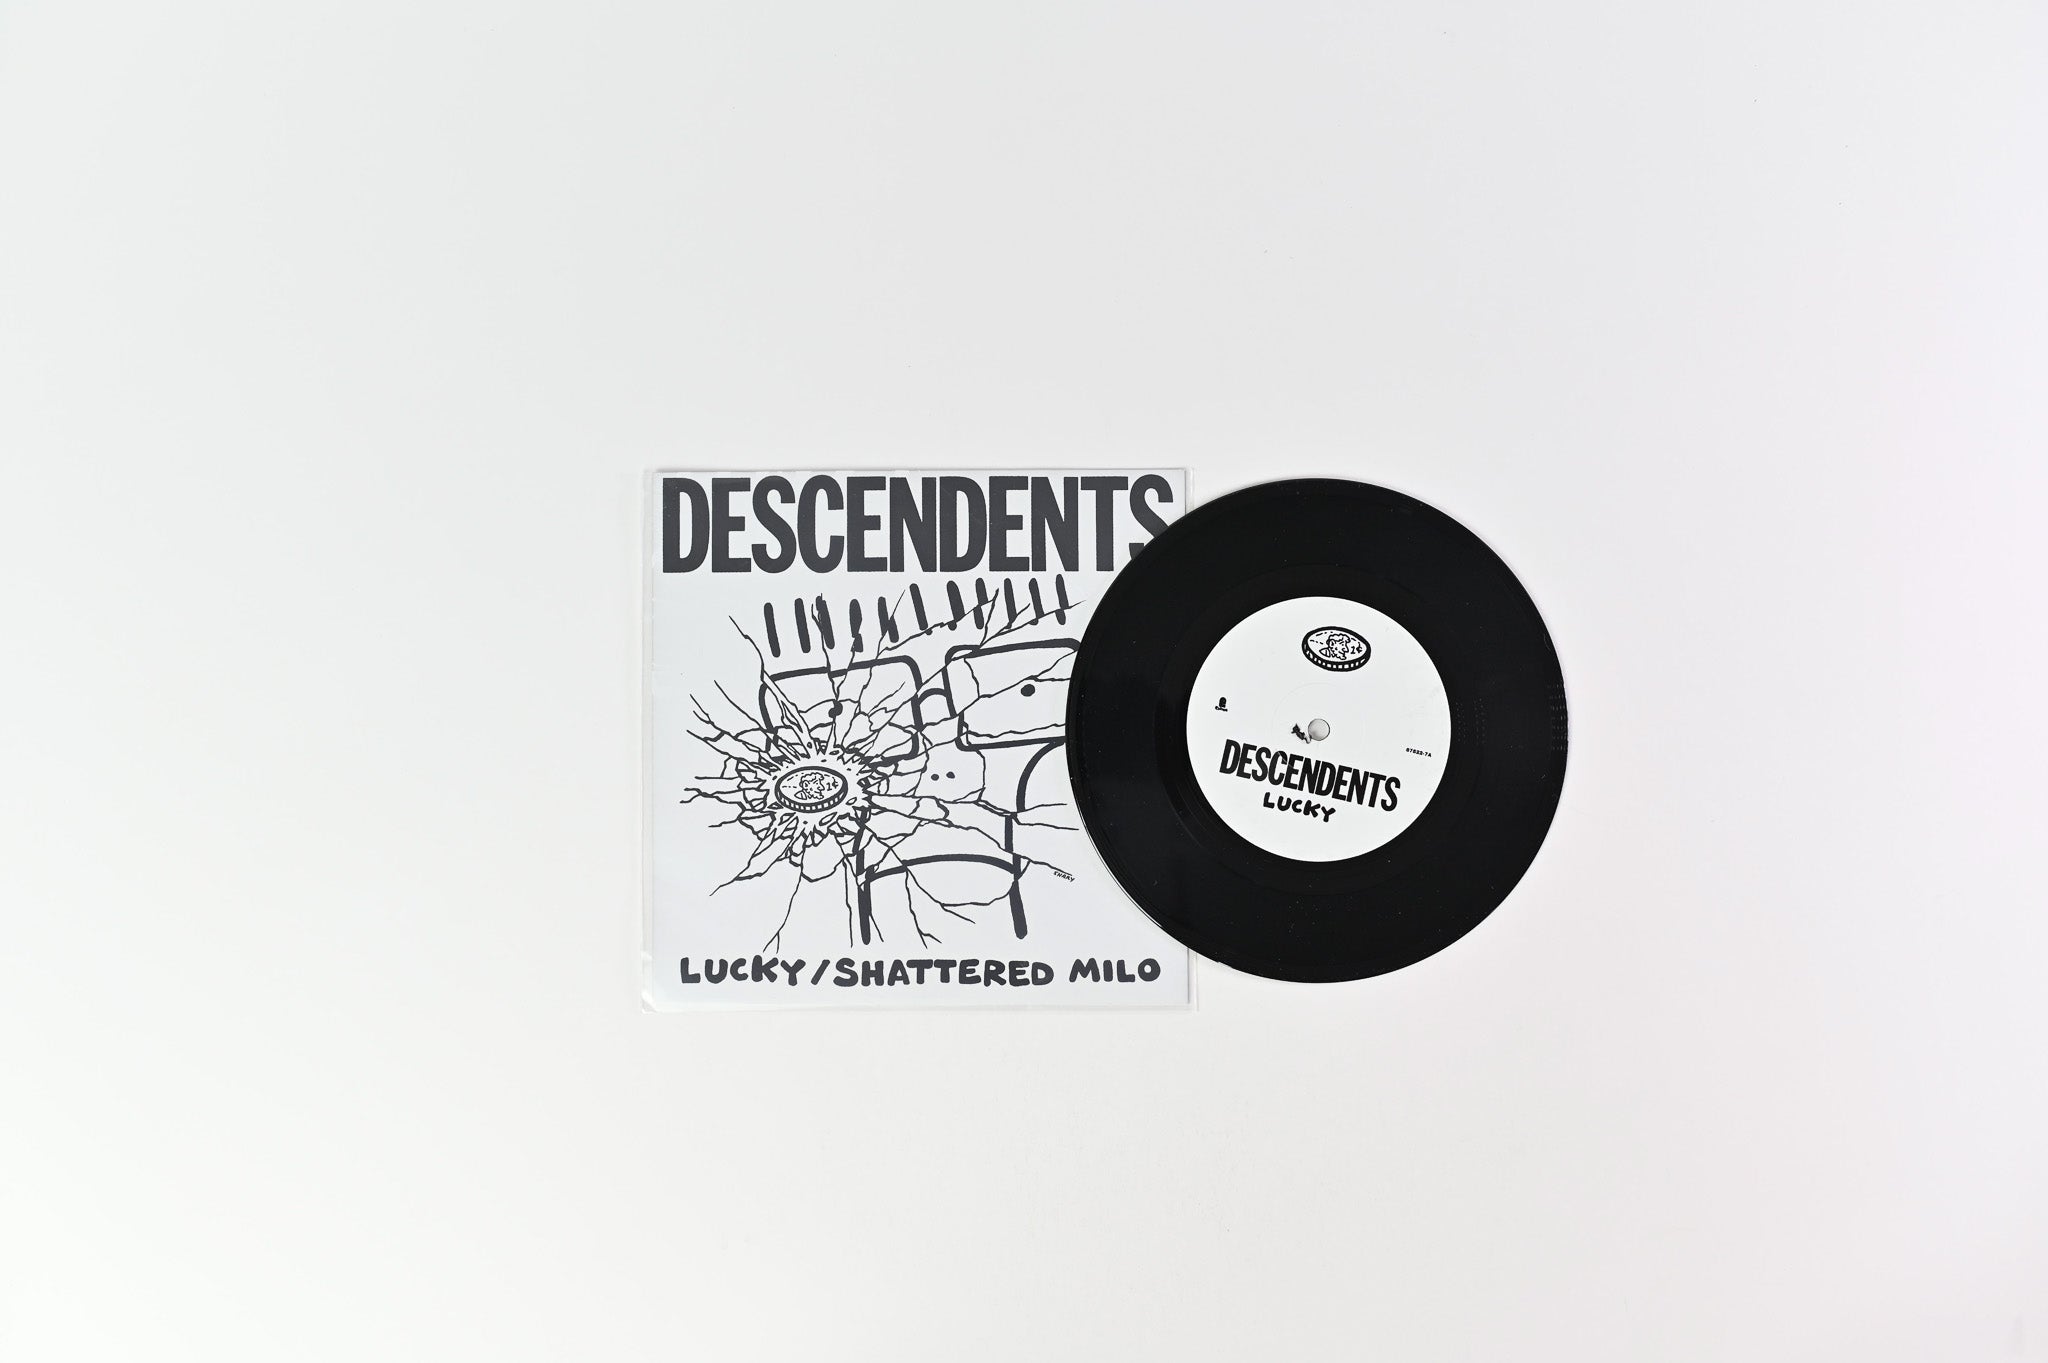 Descendents - Everything Sucks on Epitaph 180 Gram Reissue Plus 7"